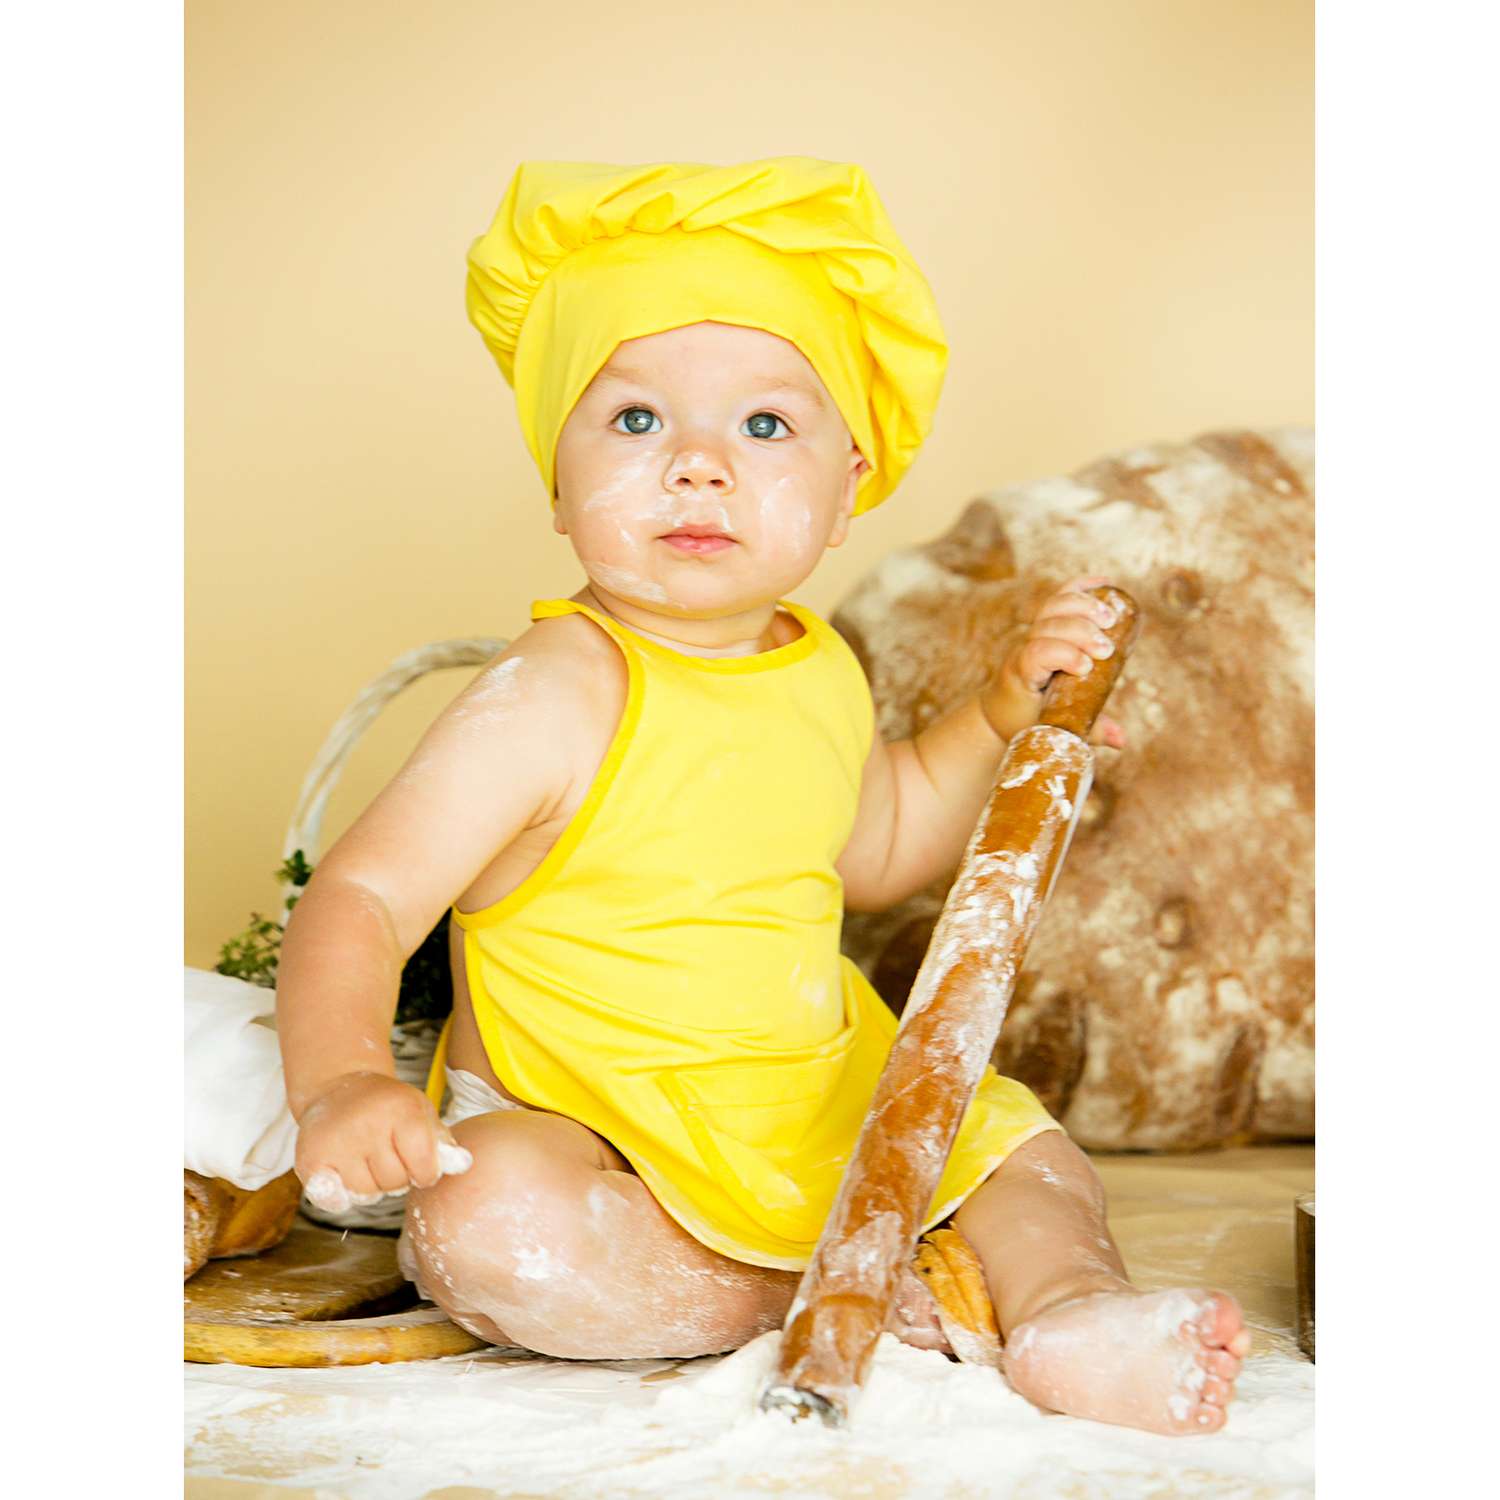 Когда вышел малыш в желтом. Малыш желтый. Младенец в желтом. Малоы ш в желтом. Ребенок в желтом костюме.